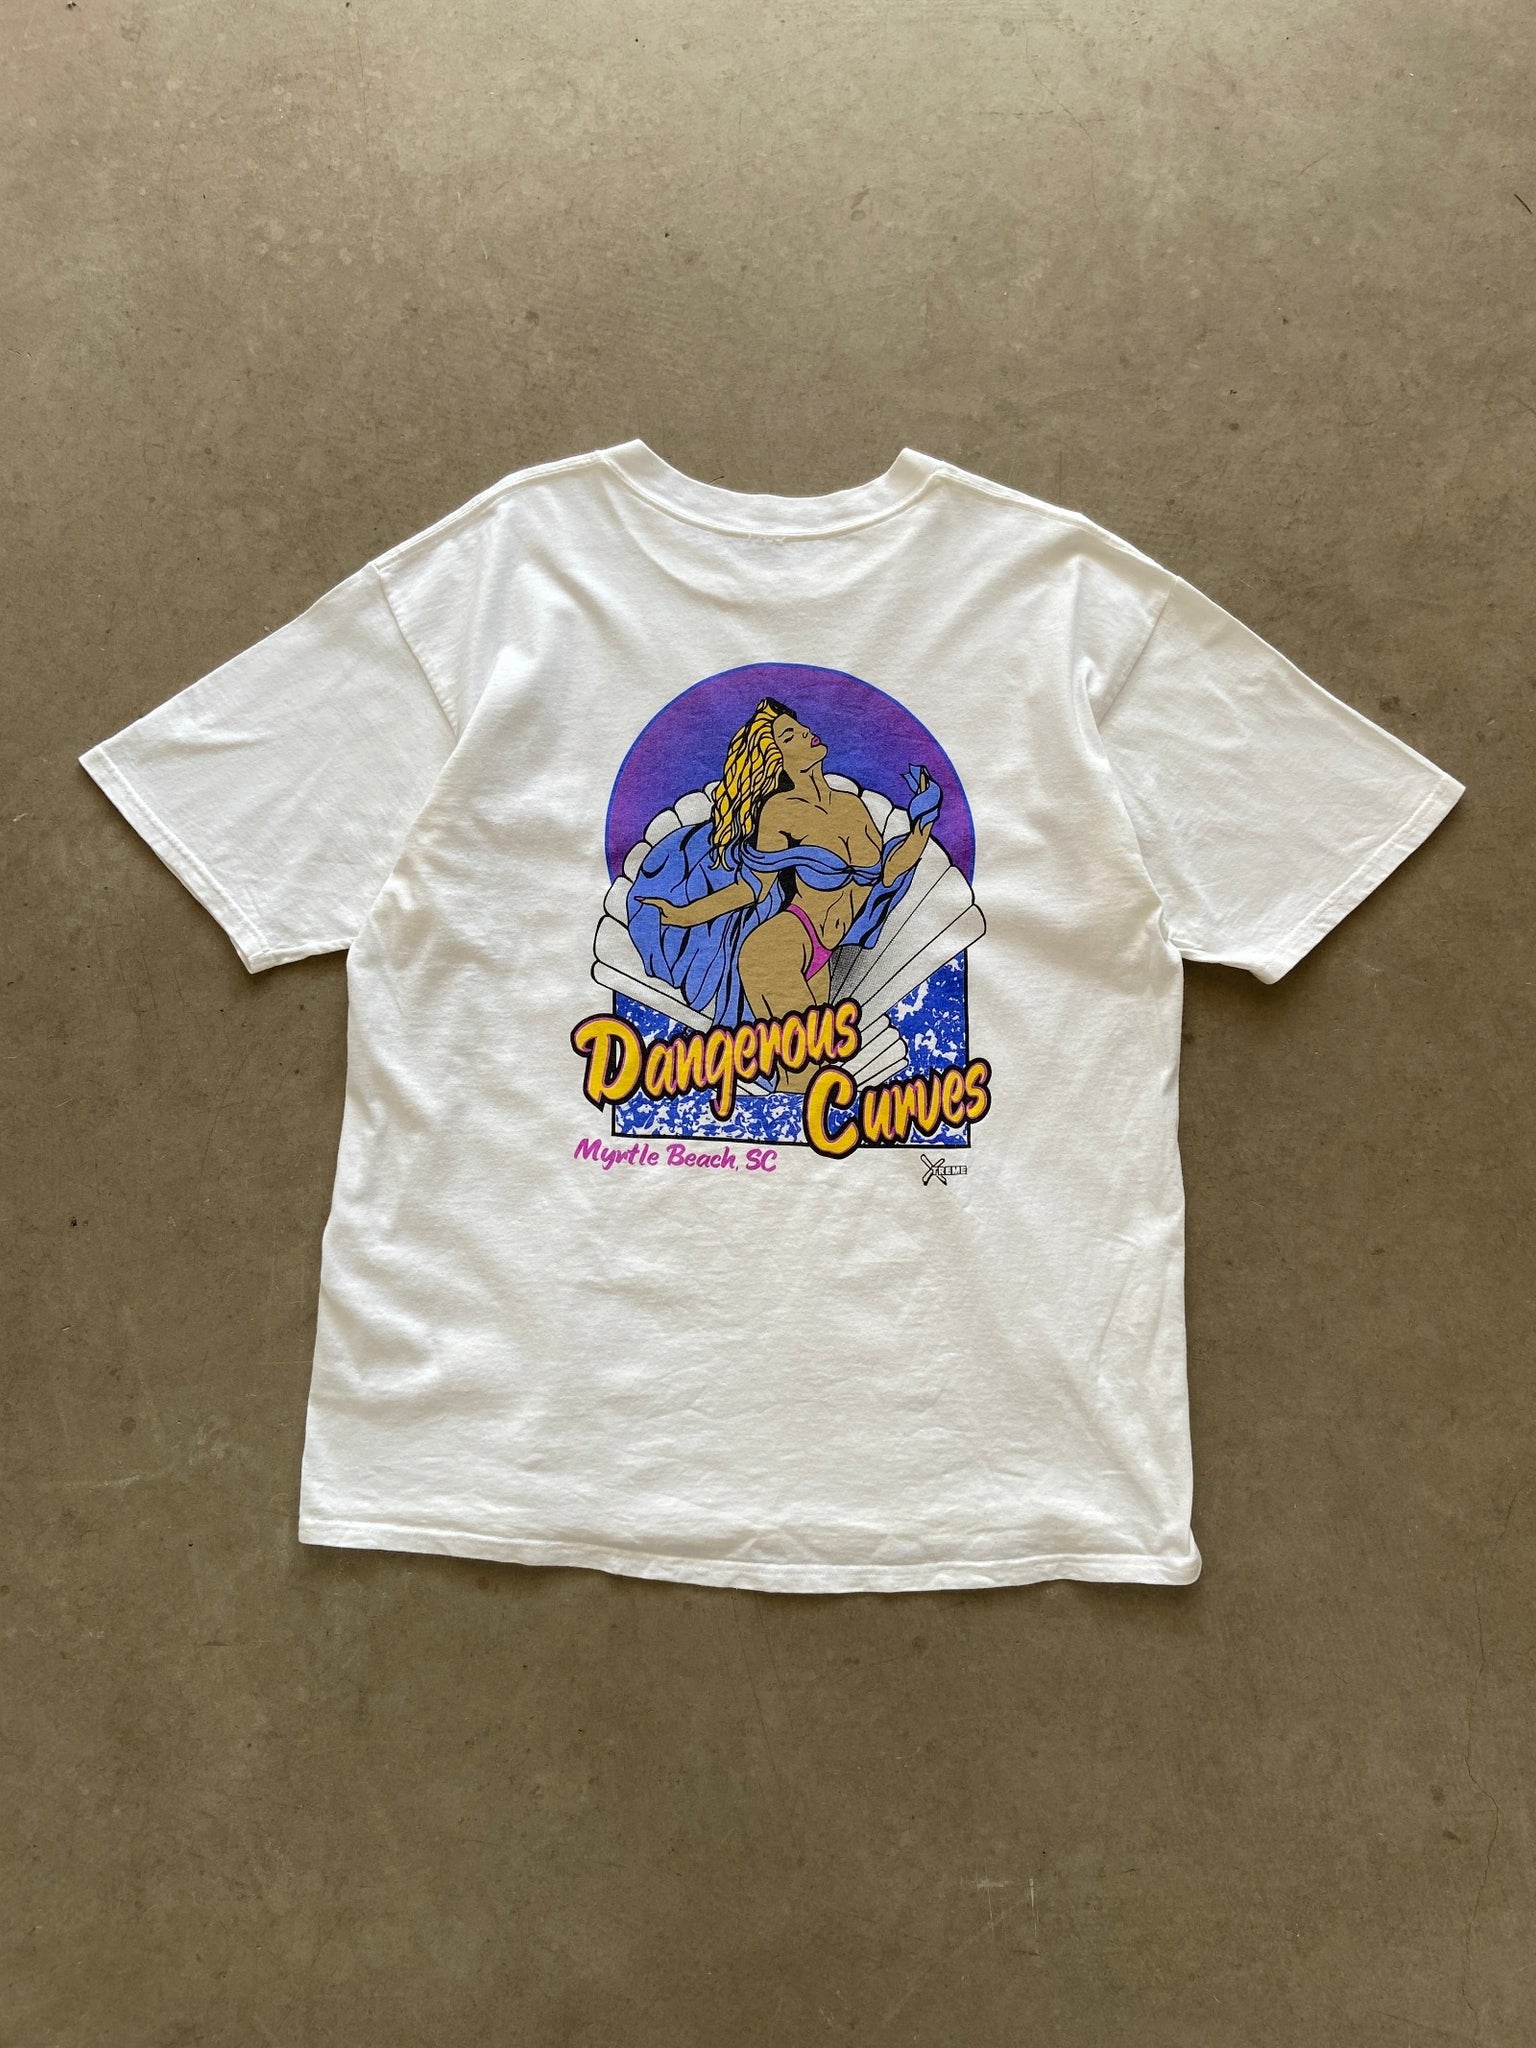 1990's Dangerous Curves Gentleman's Club T-Shirt - XL